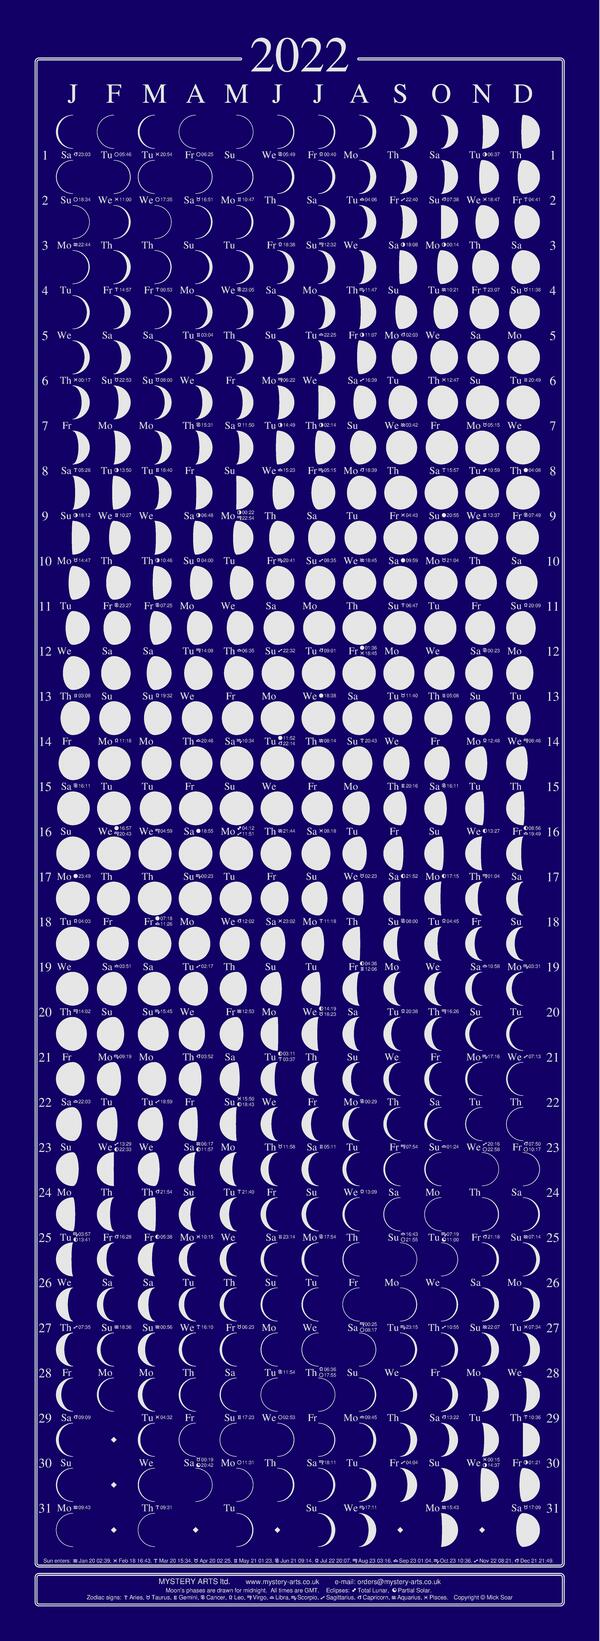 Lunar Calendar 2022 Uk Heunos